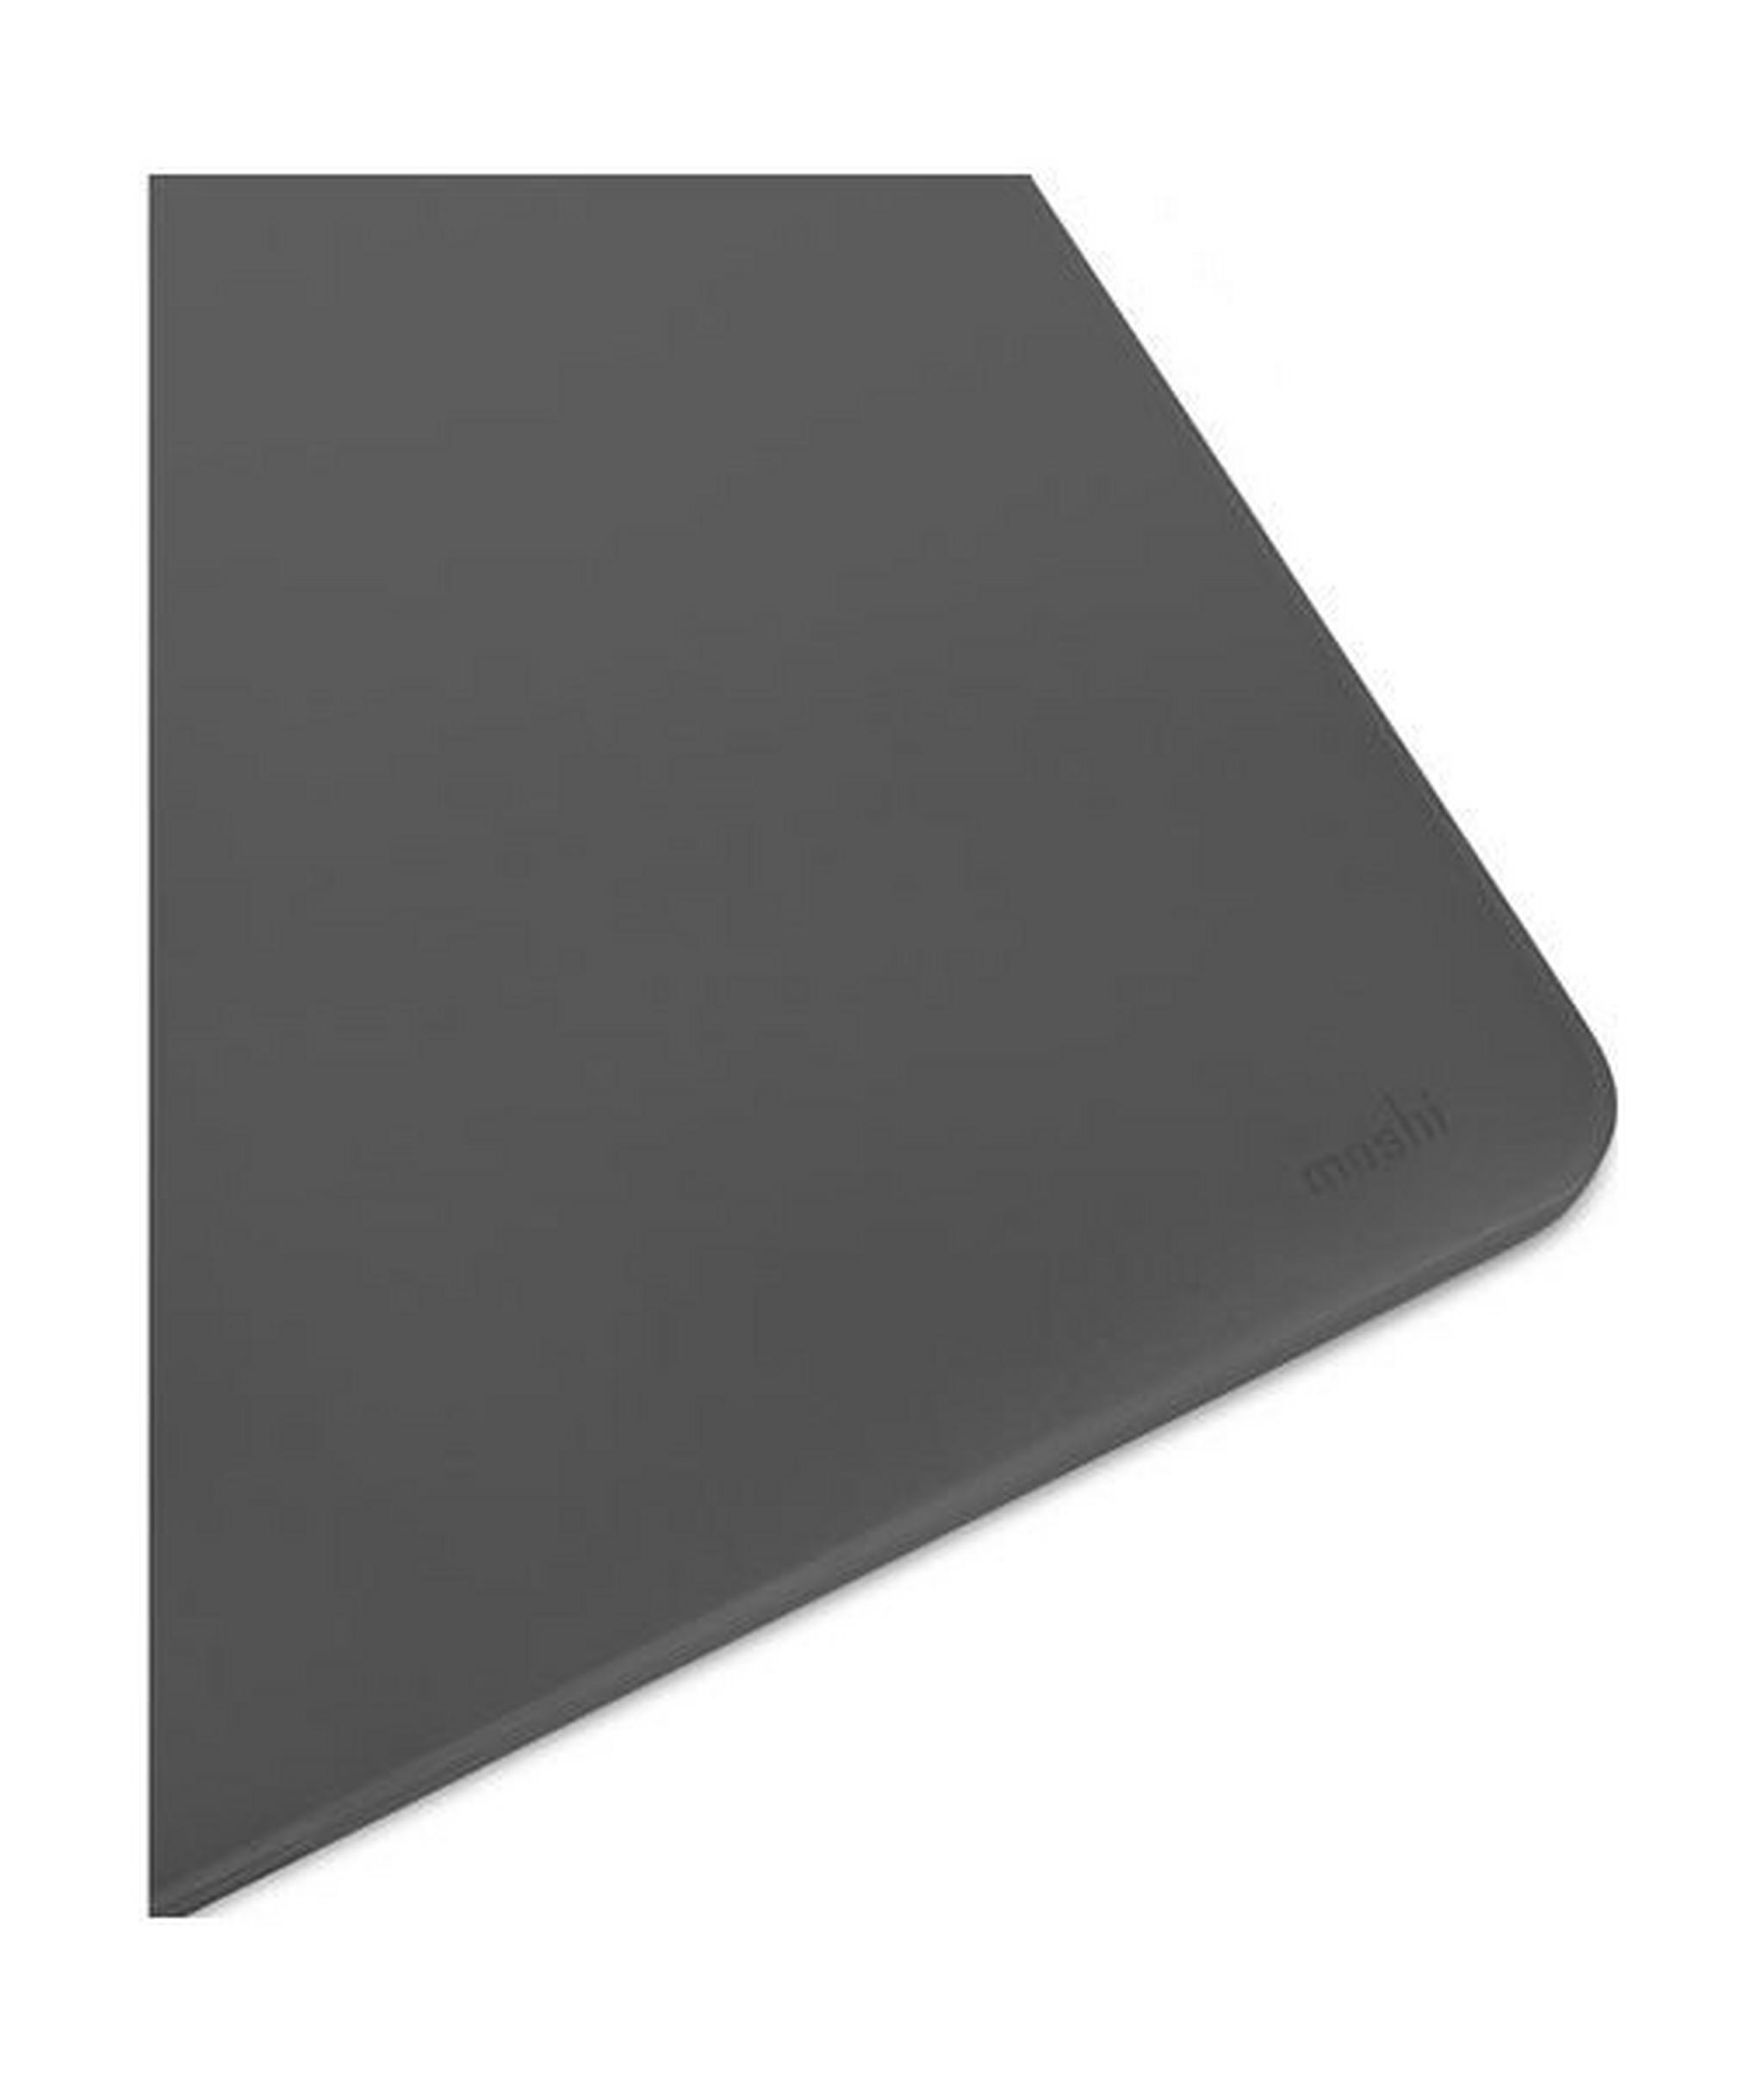 Moshi iGlaze MB Pro Protective Case for MacBook Pro 13-inch (99MO071006) - Blush Pink